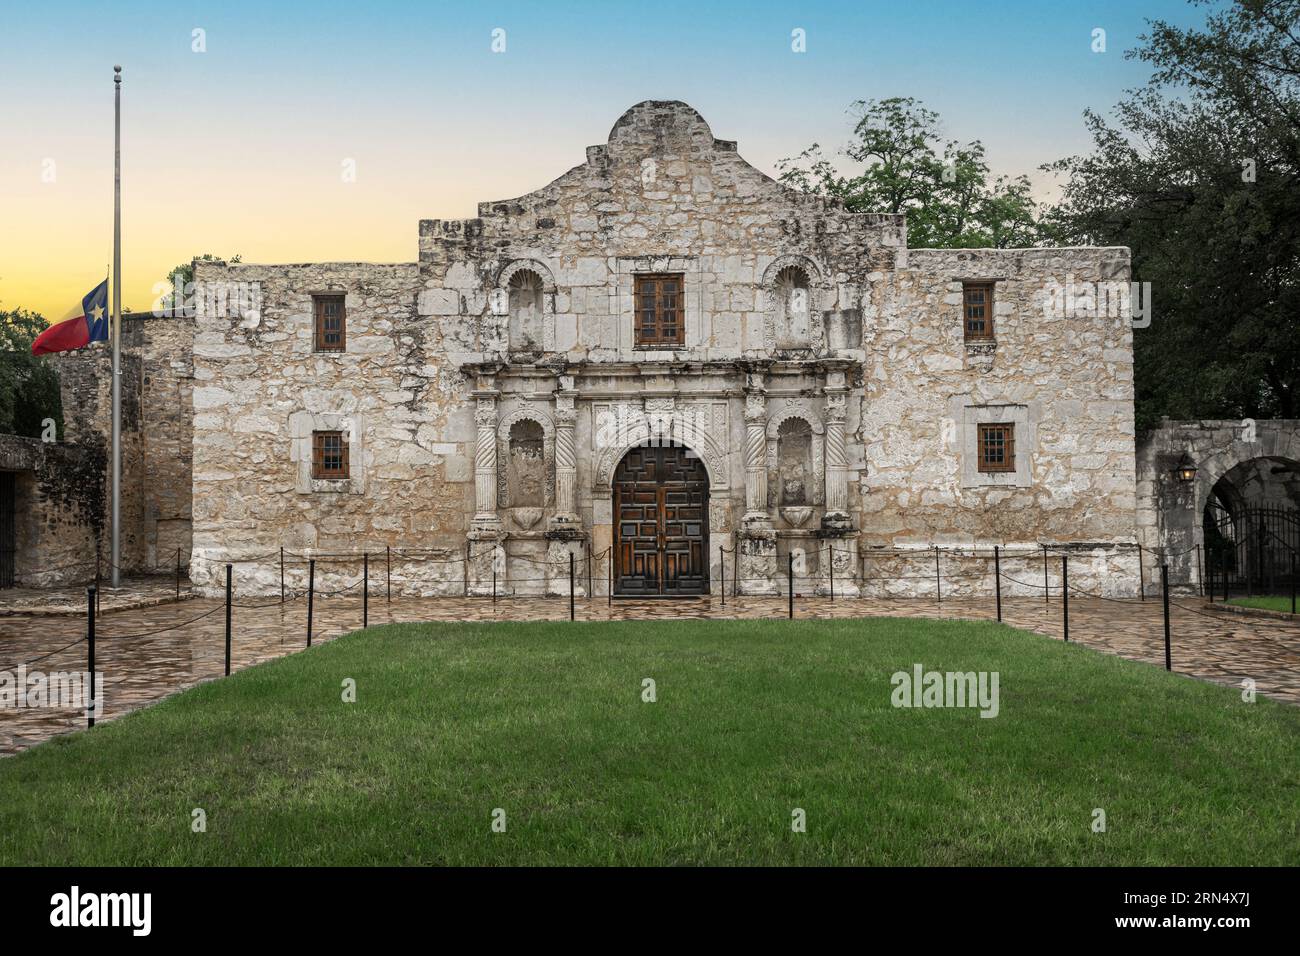 Die historische Mission San Antonio de Valero, bekannt als The Alamo in San Antonio, Texas. Stockfoto